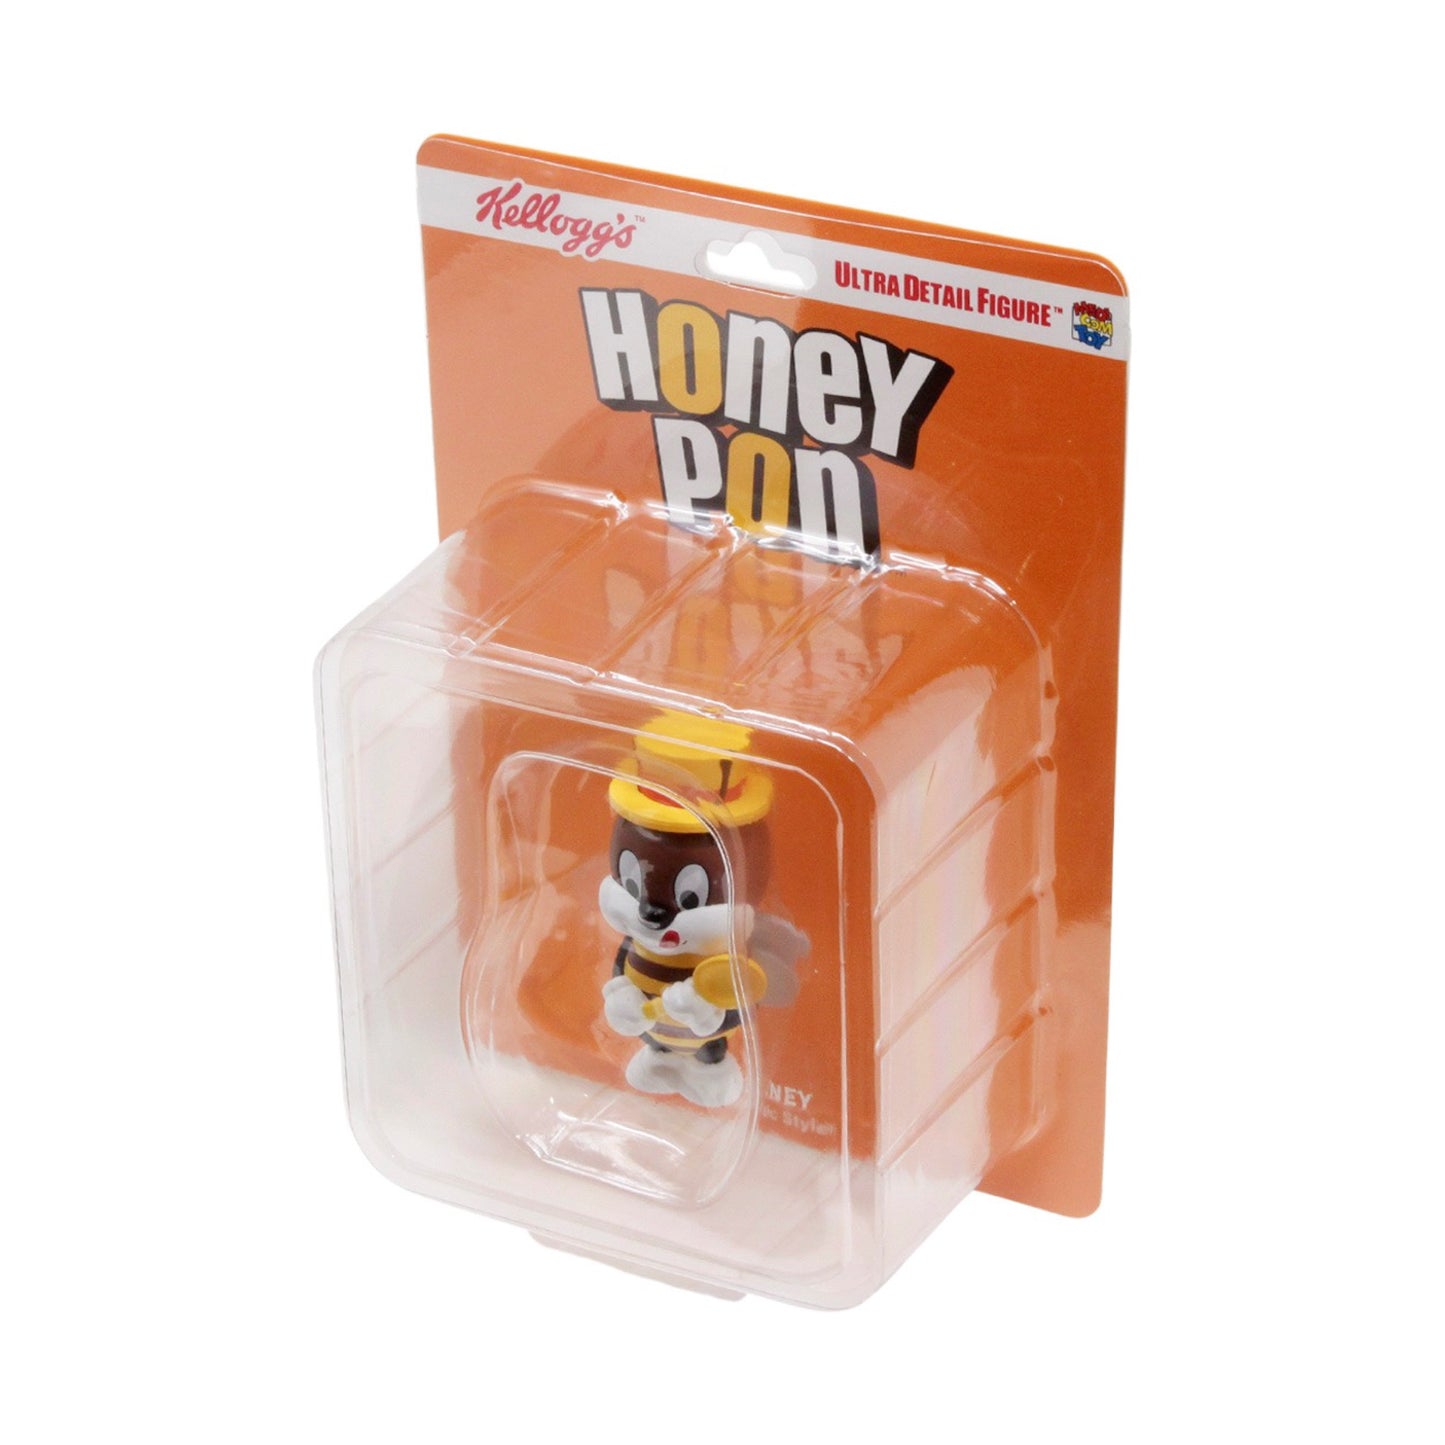 MEDICOM TOY: UDF - Kellogg's Frosted Honey Pon Honey Classic Style Figure